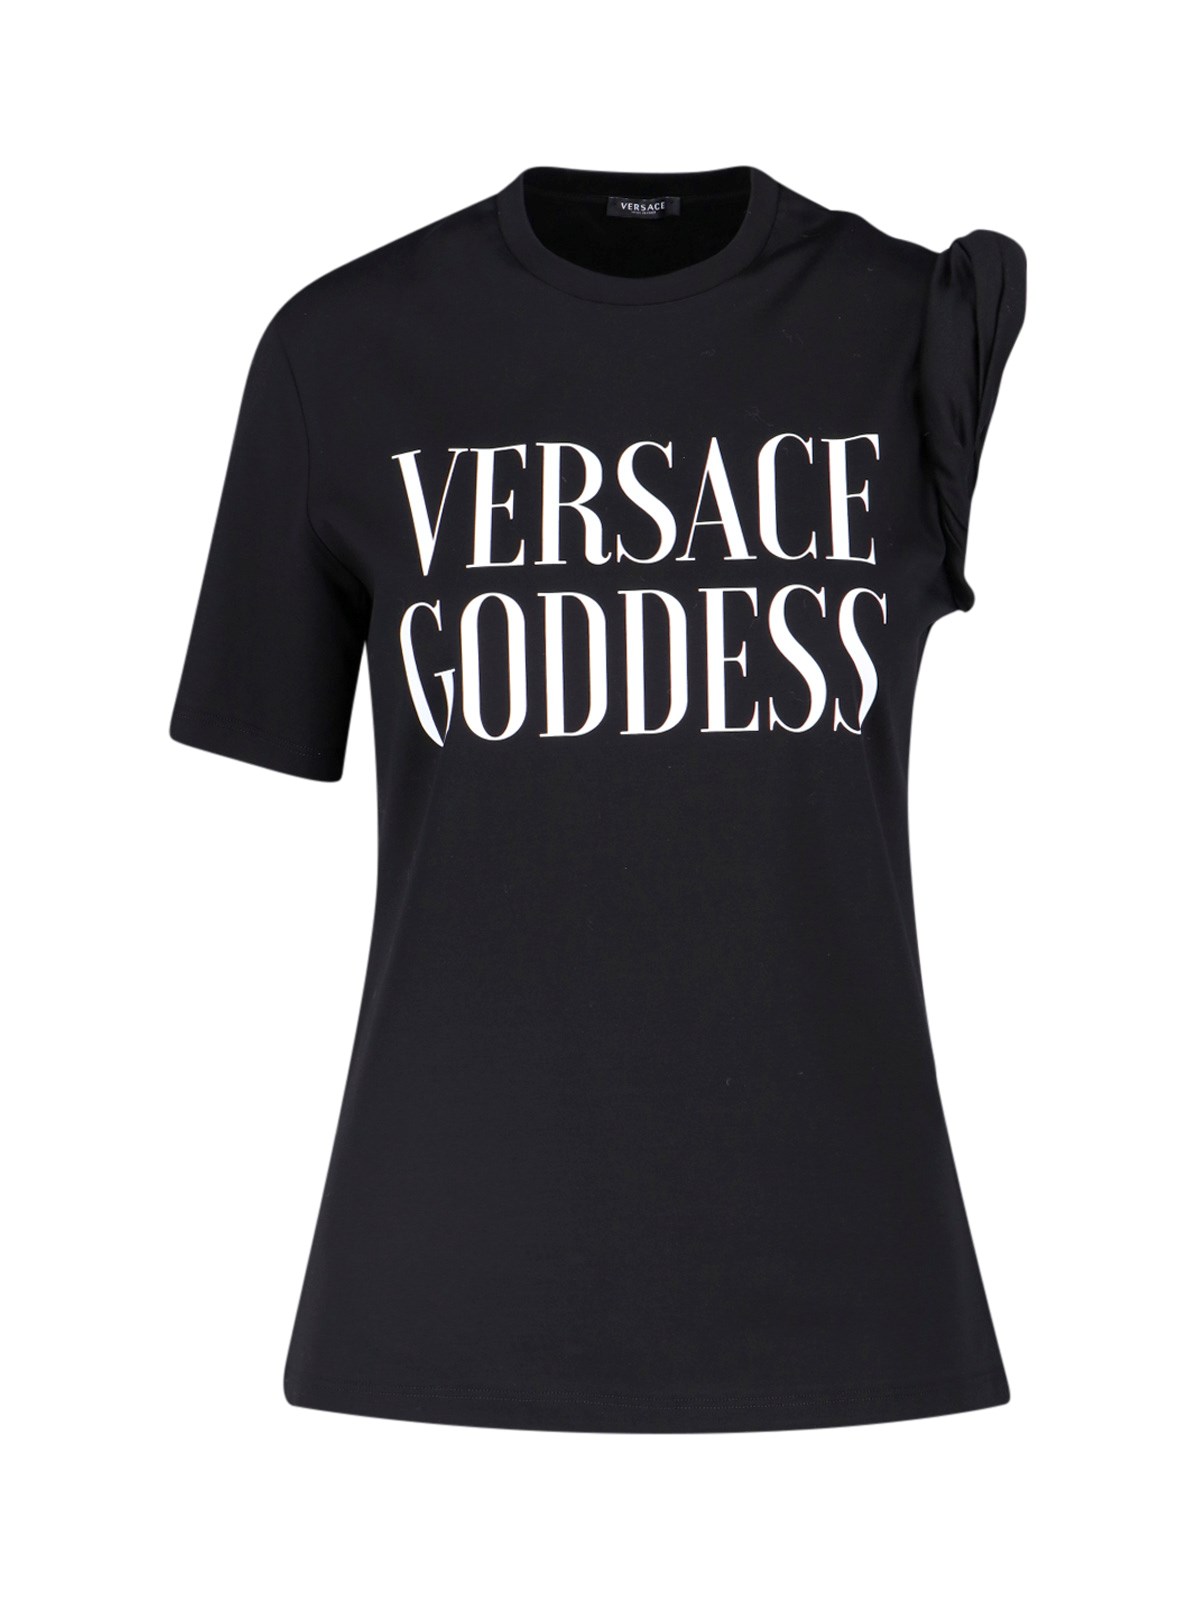 Versace "goddess" One Shoulder T-shirt In Nero